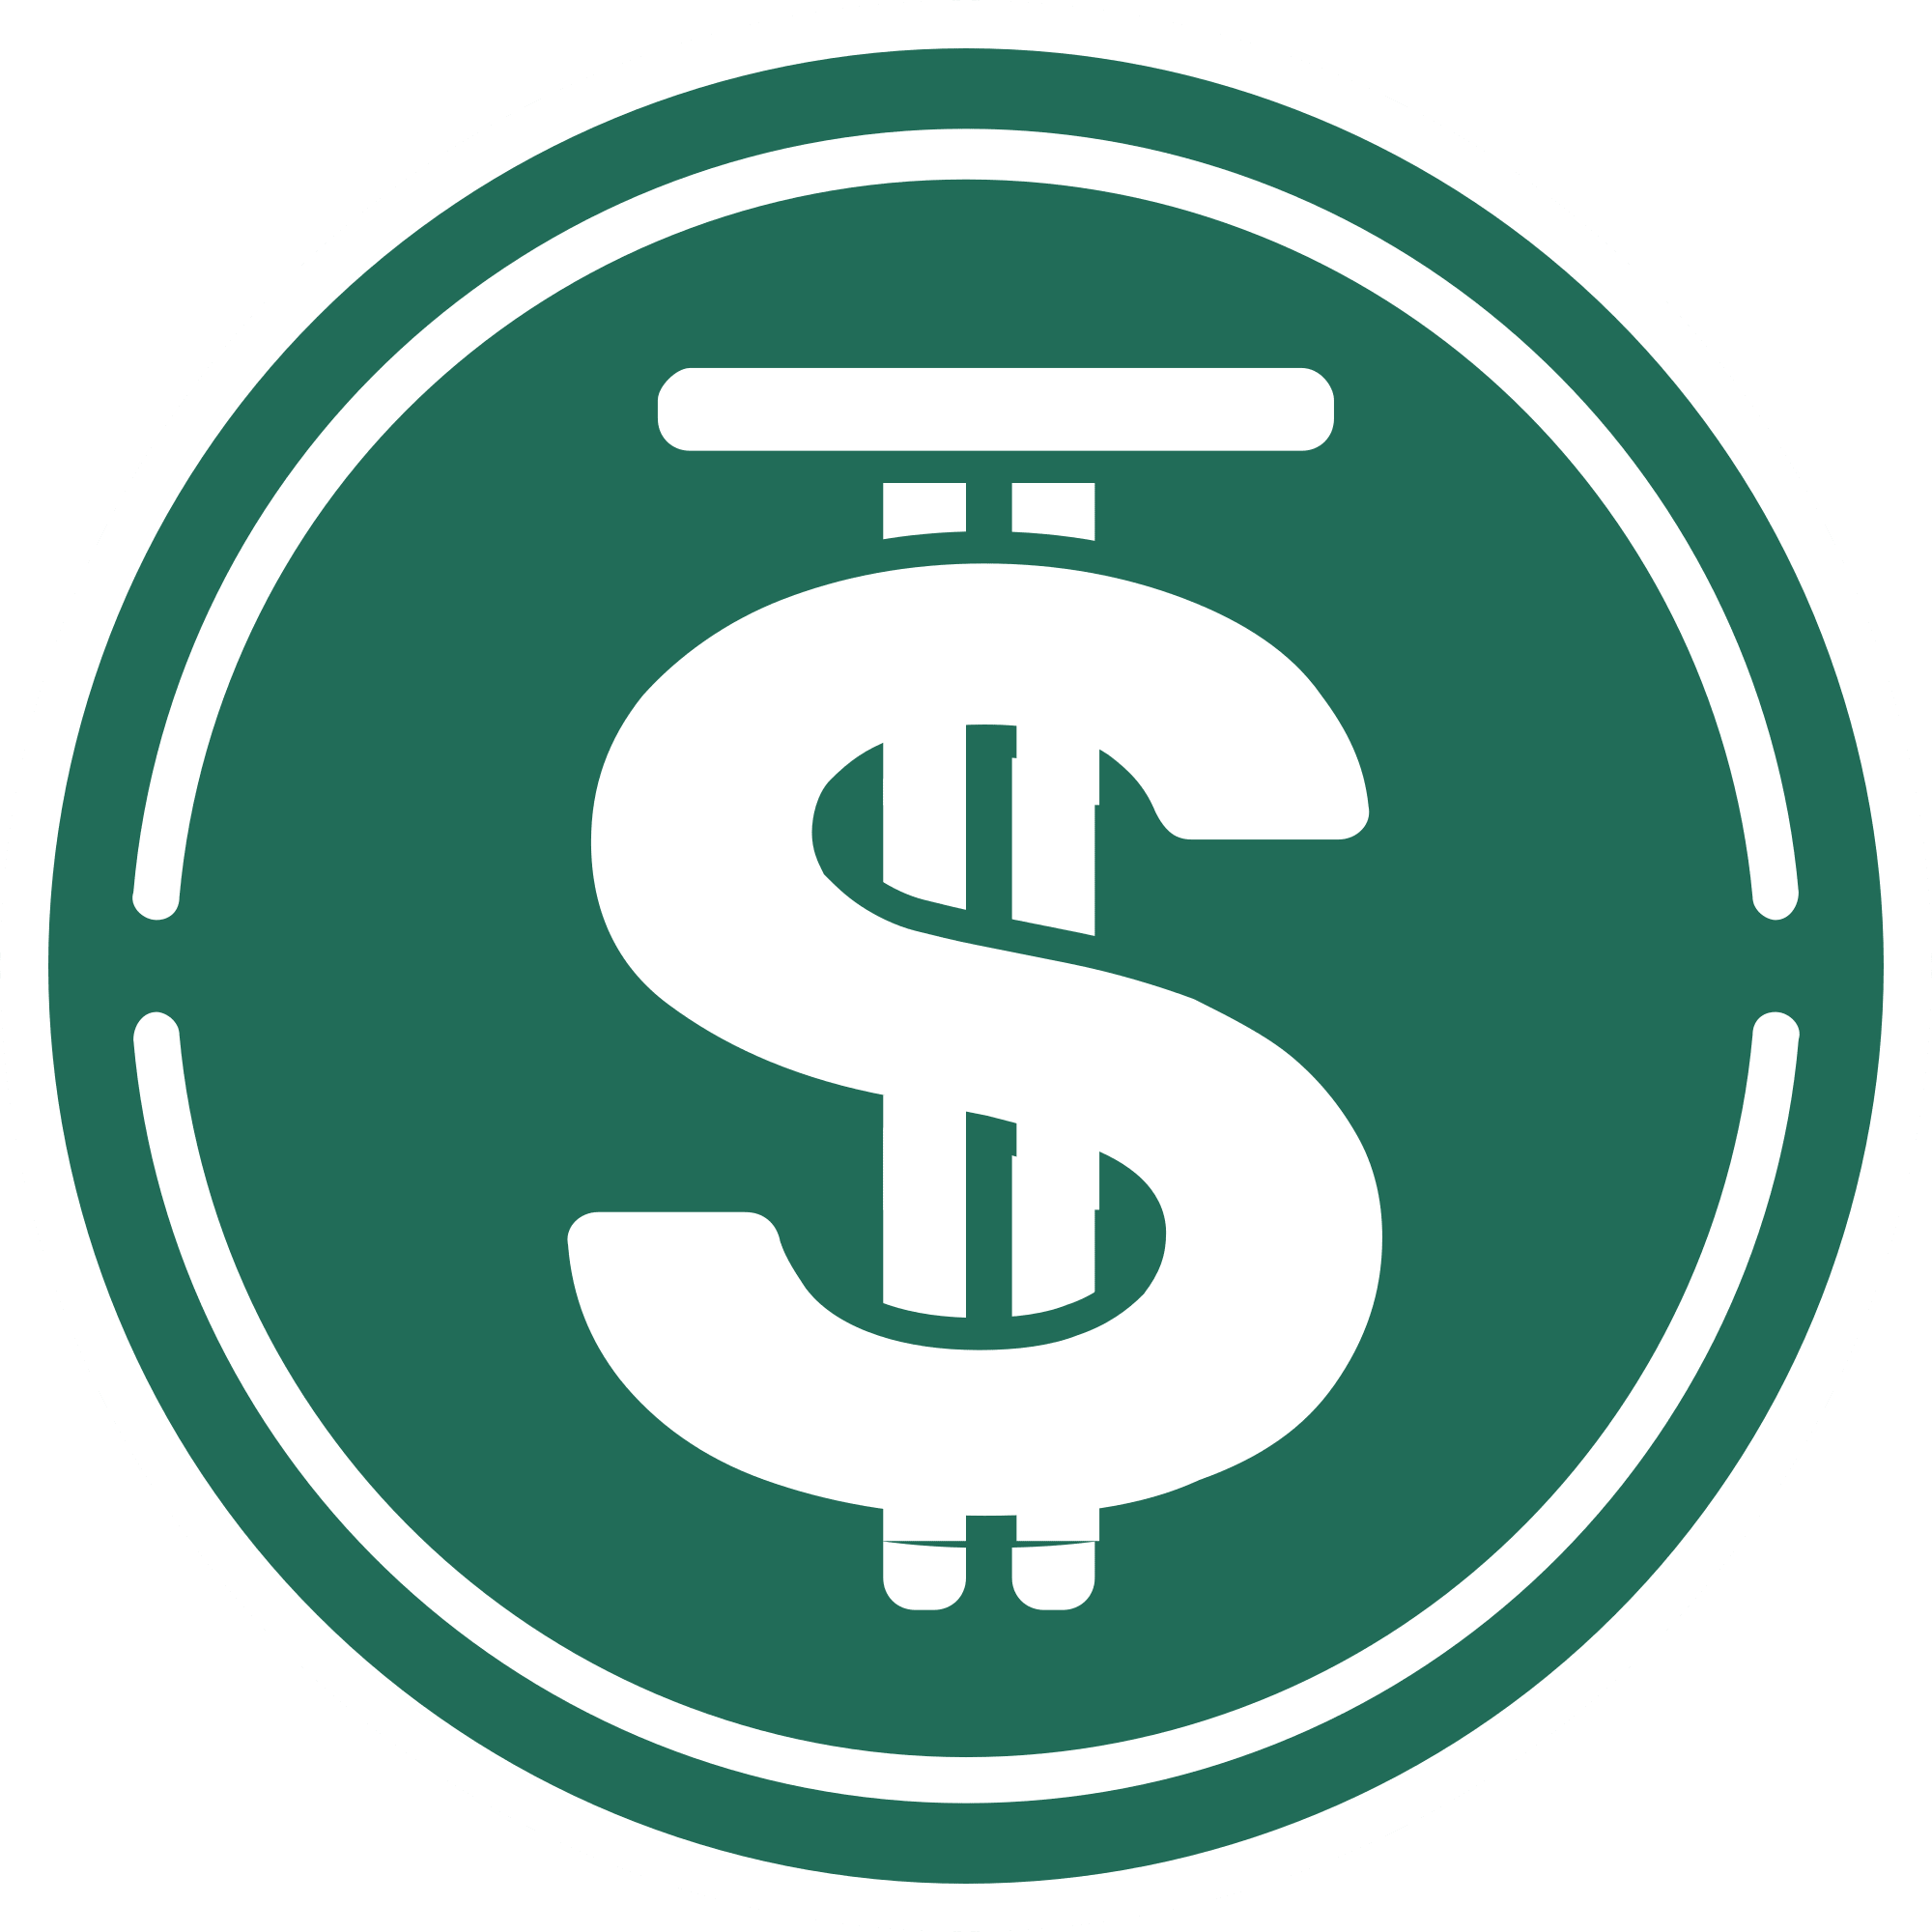 USDD (USDD) logo